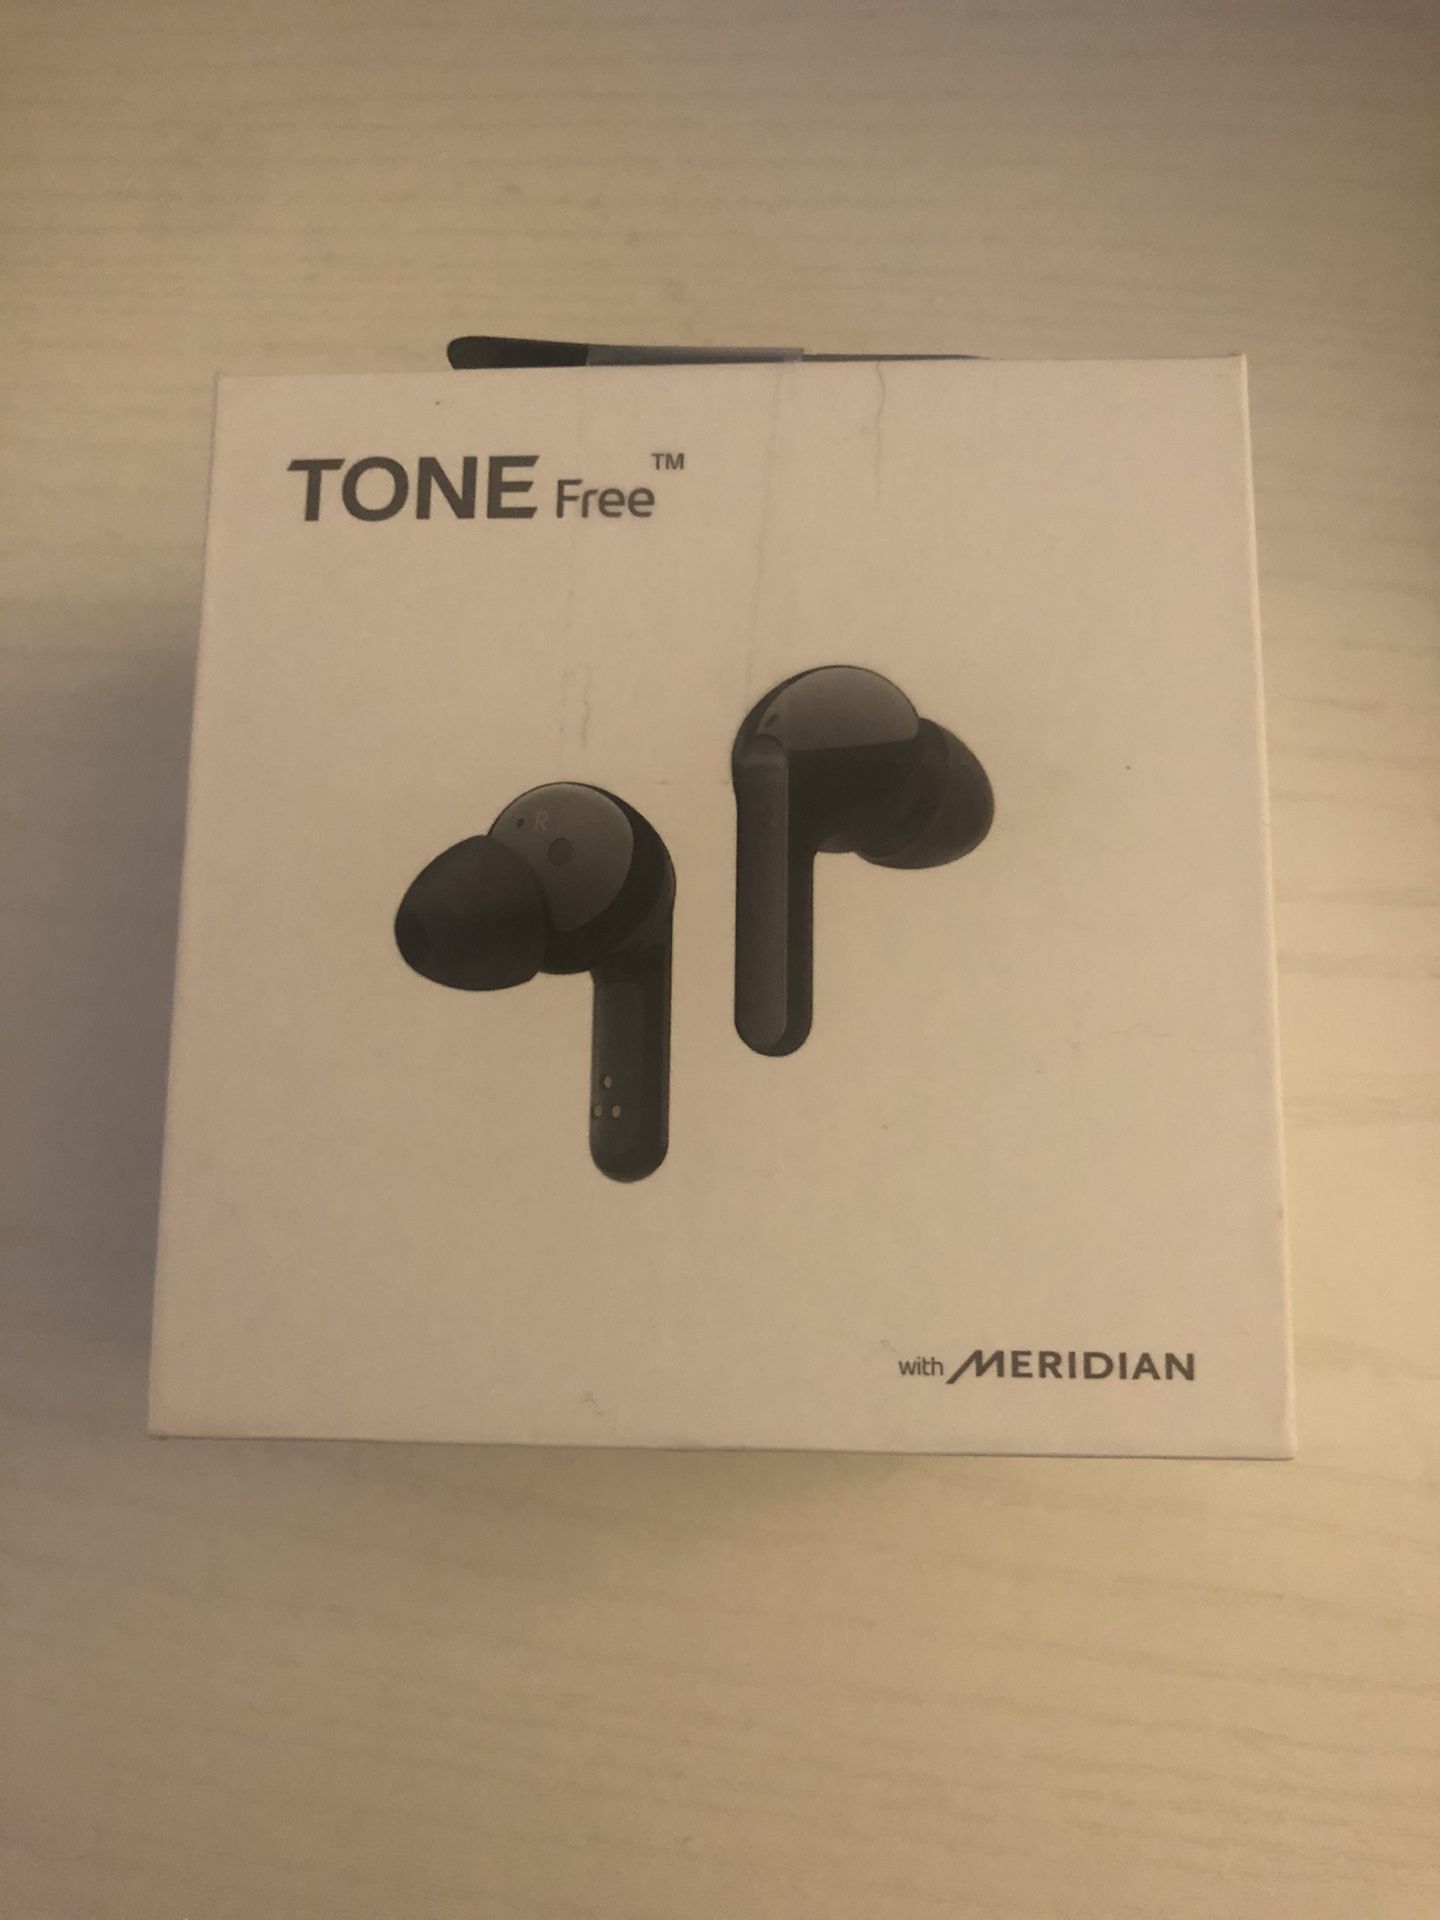 LG Tone Free wireless headphones